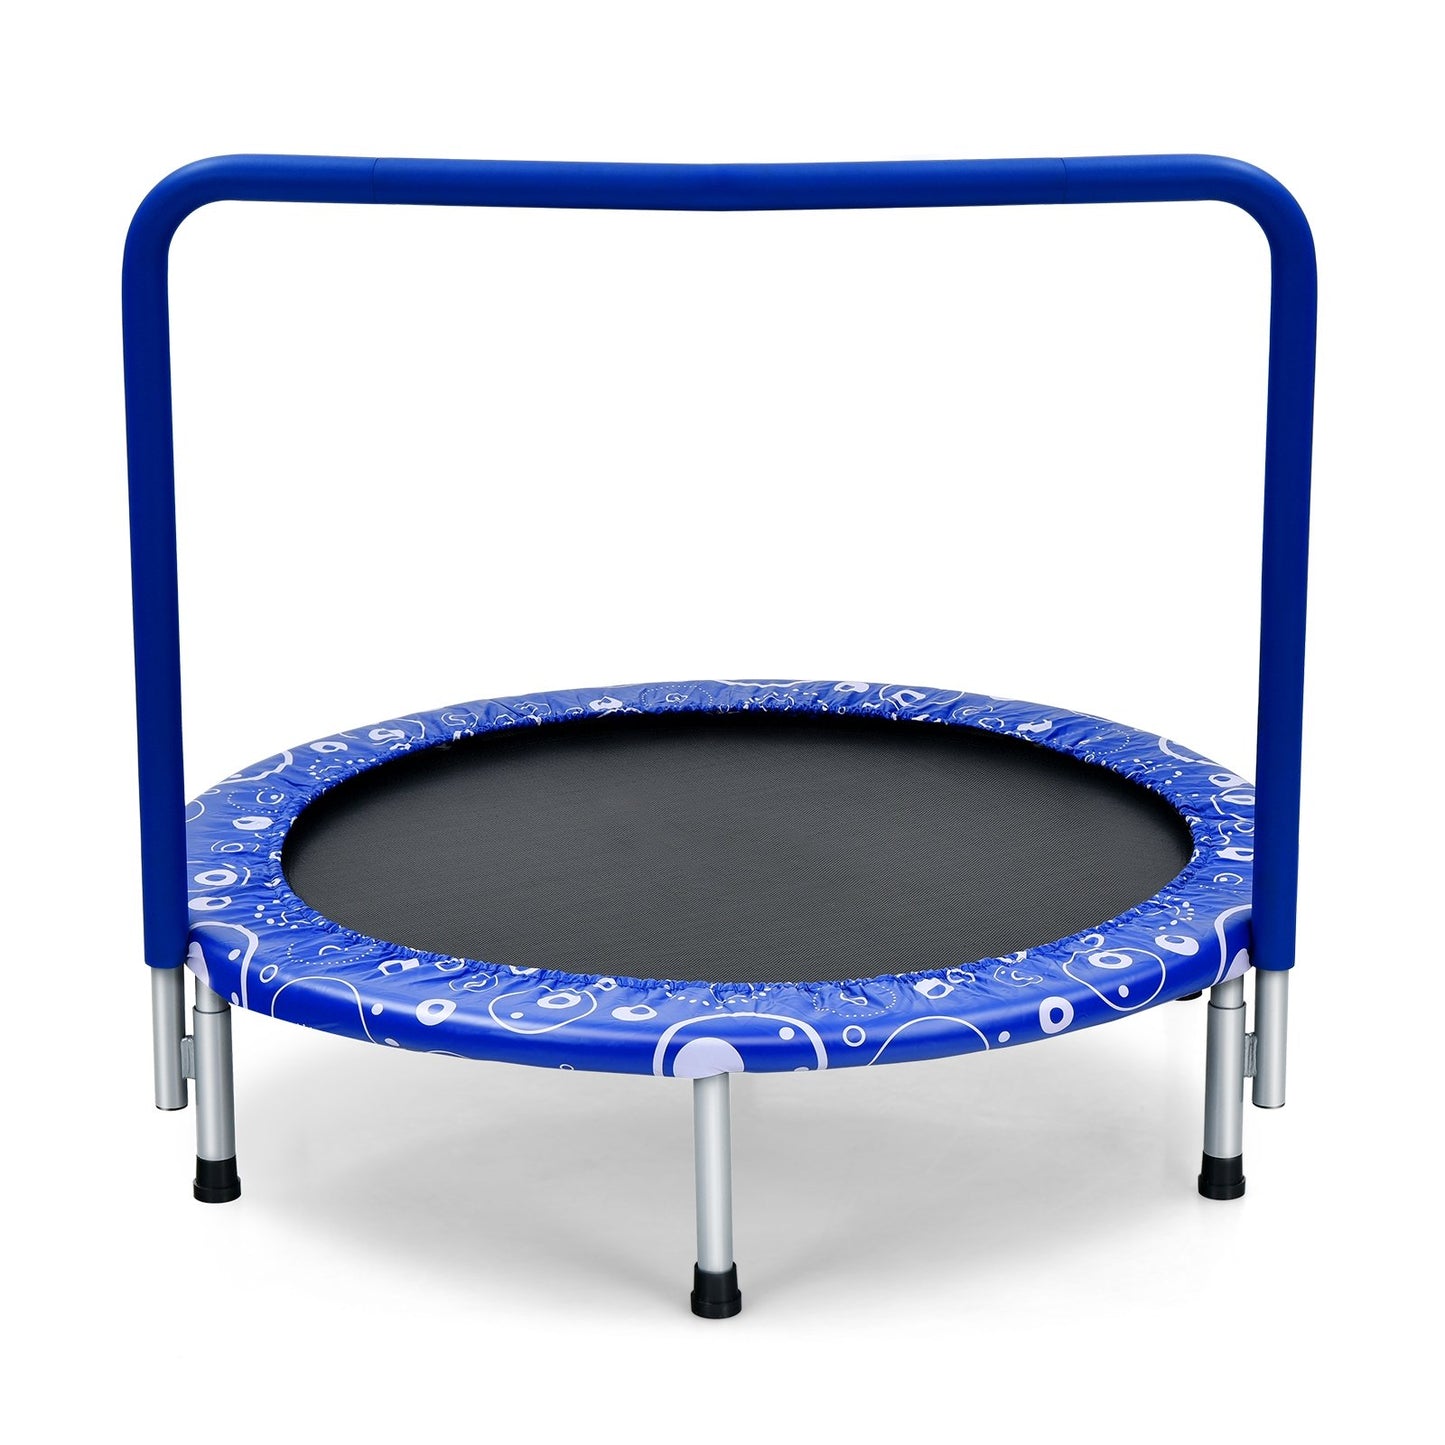 36 Inch Kids Trampoline Mini Rebounder with Full Covered Handrail , Blue